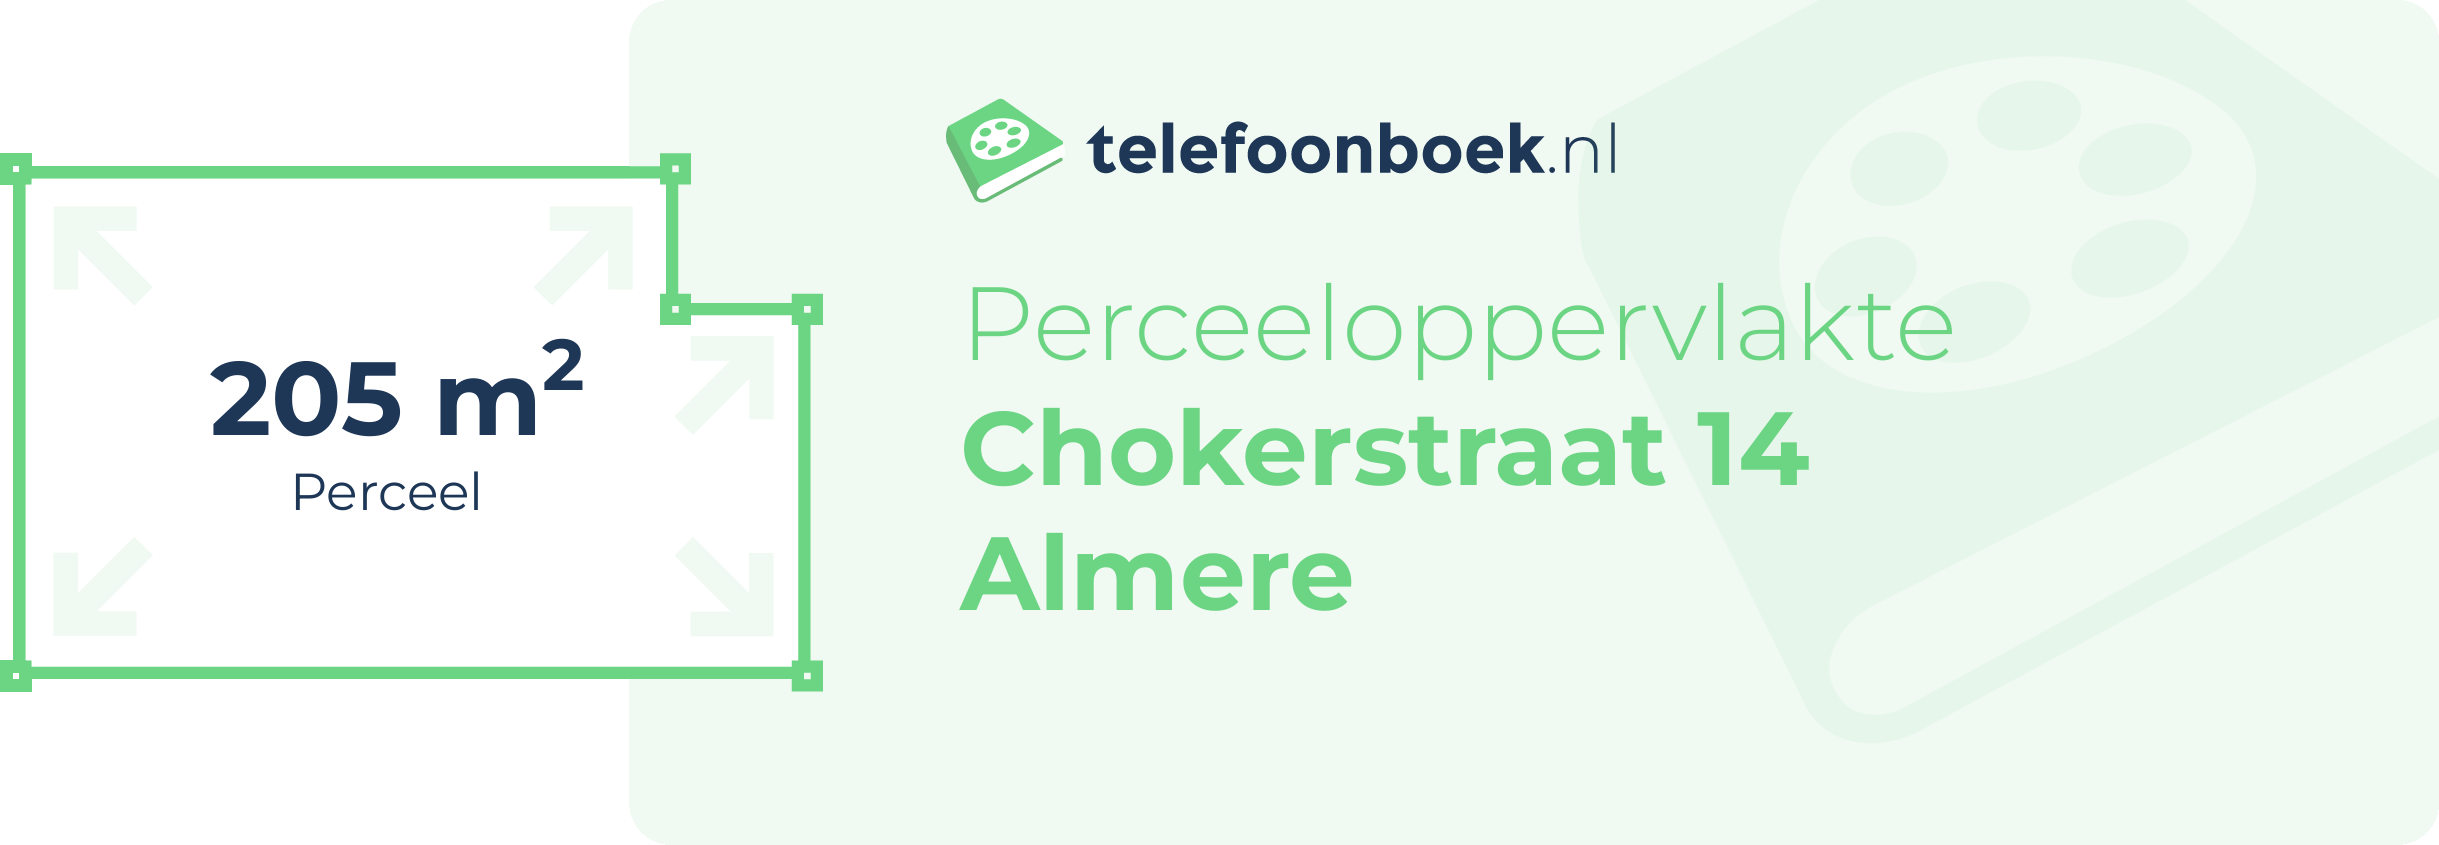 Perceeloppervlakte Chokerstraat 14 Almere